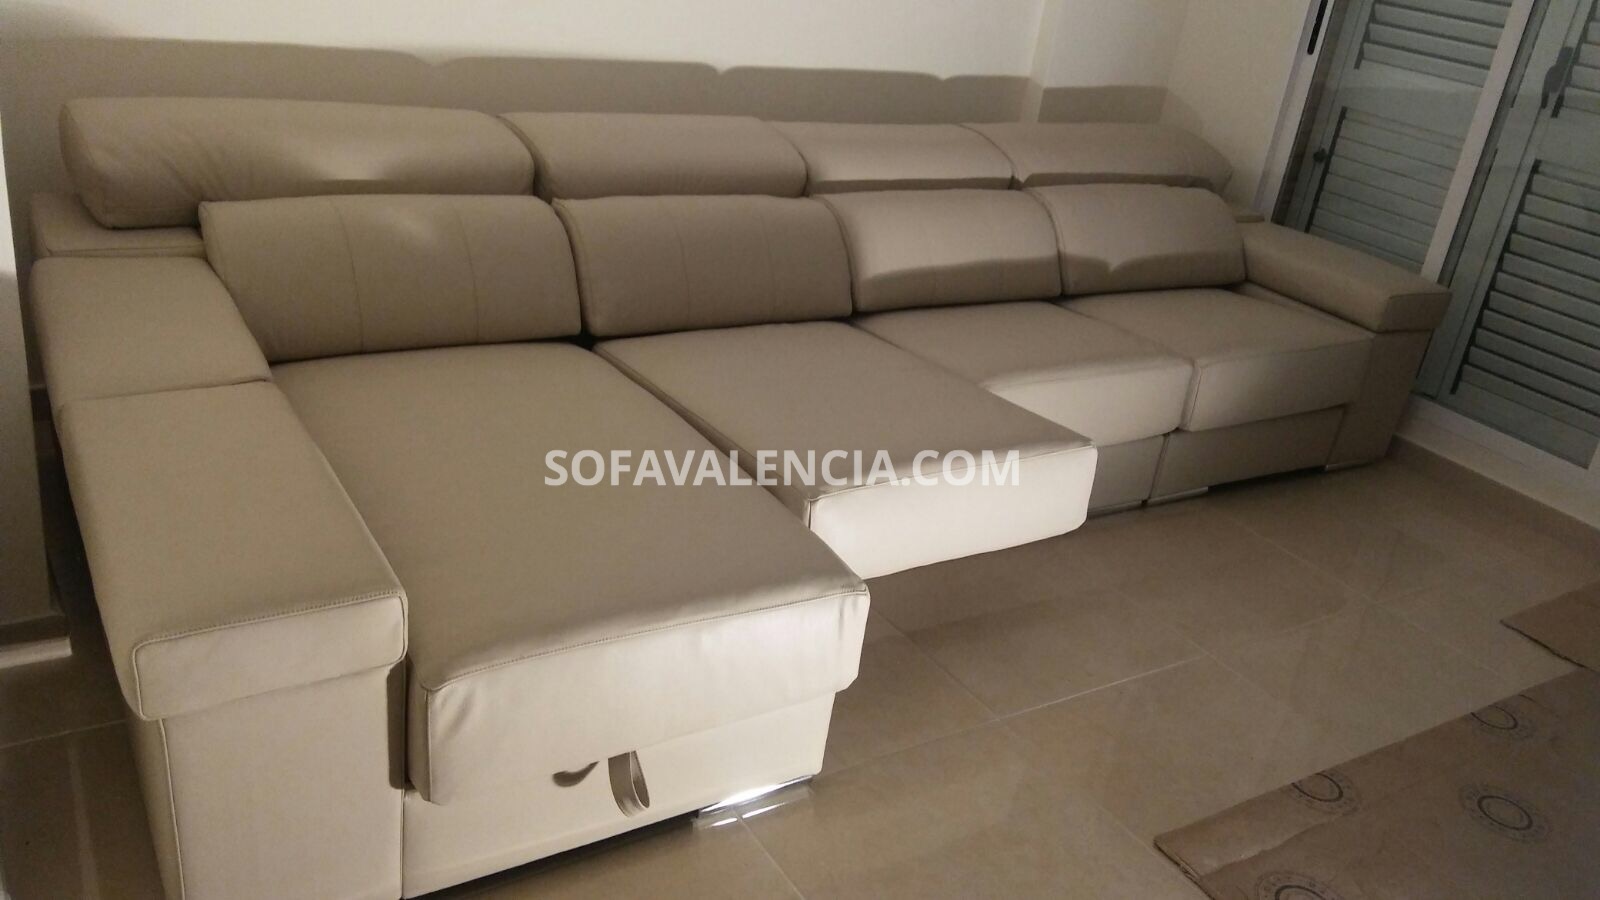 sofa-valencia-fotos-clientes-4